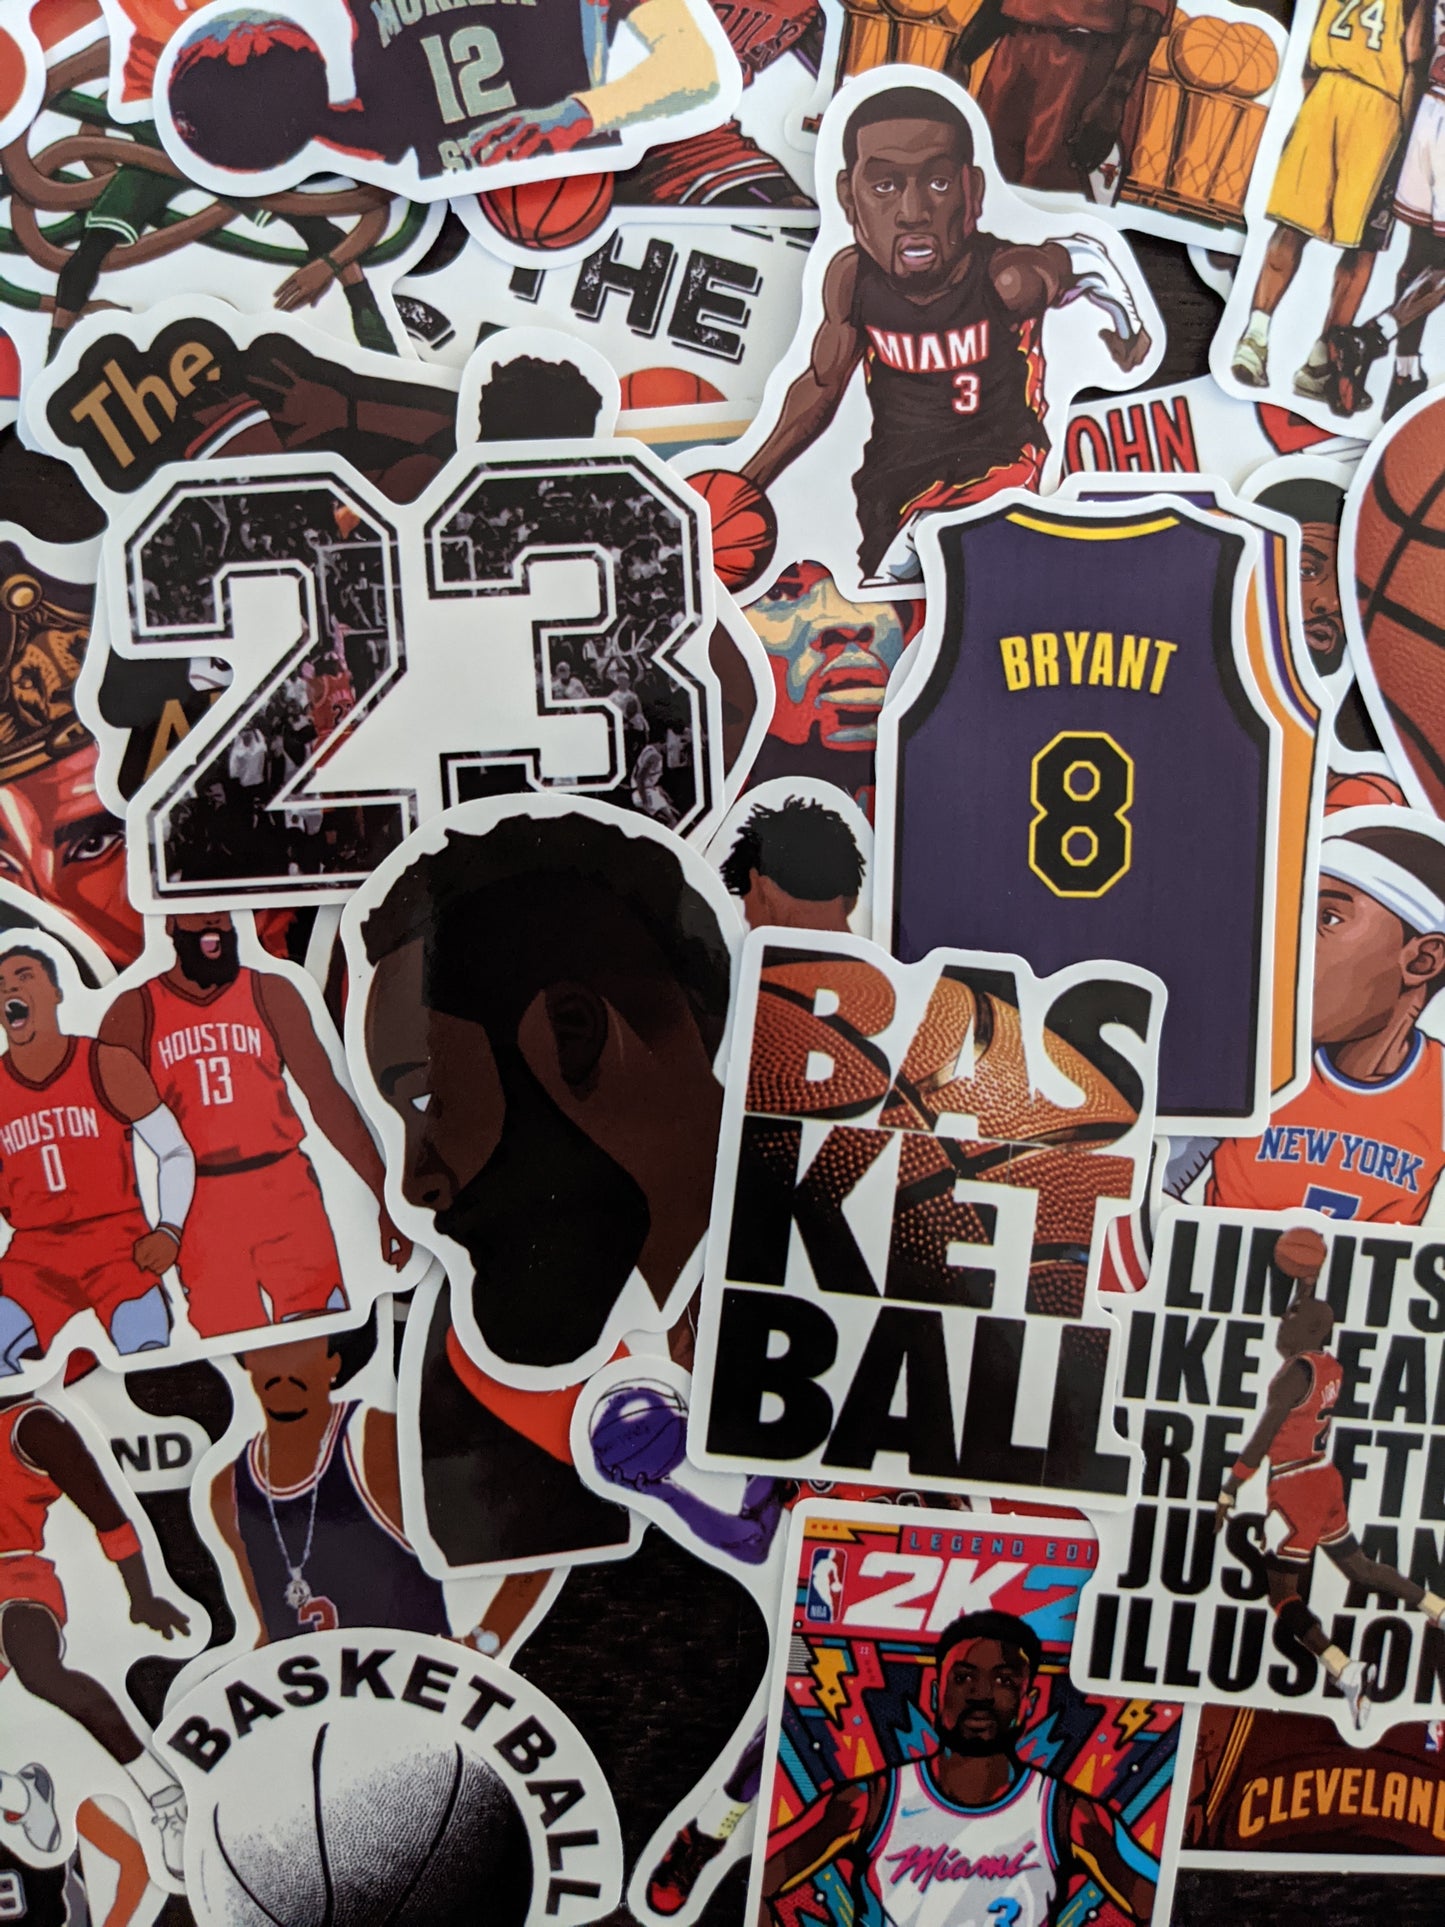 Basketball Sticker Pack